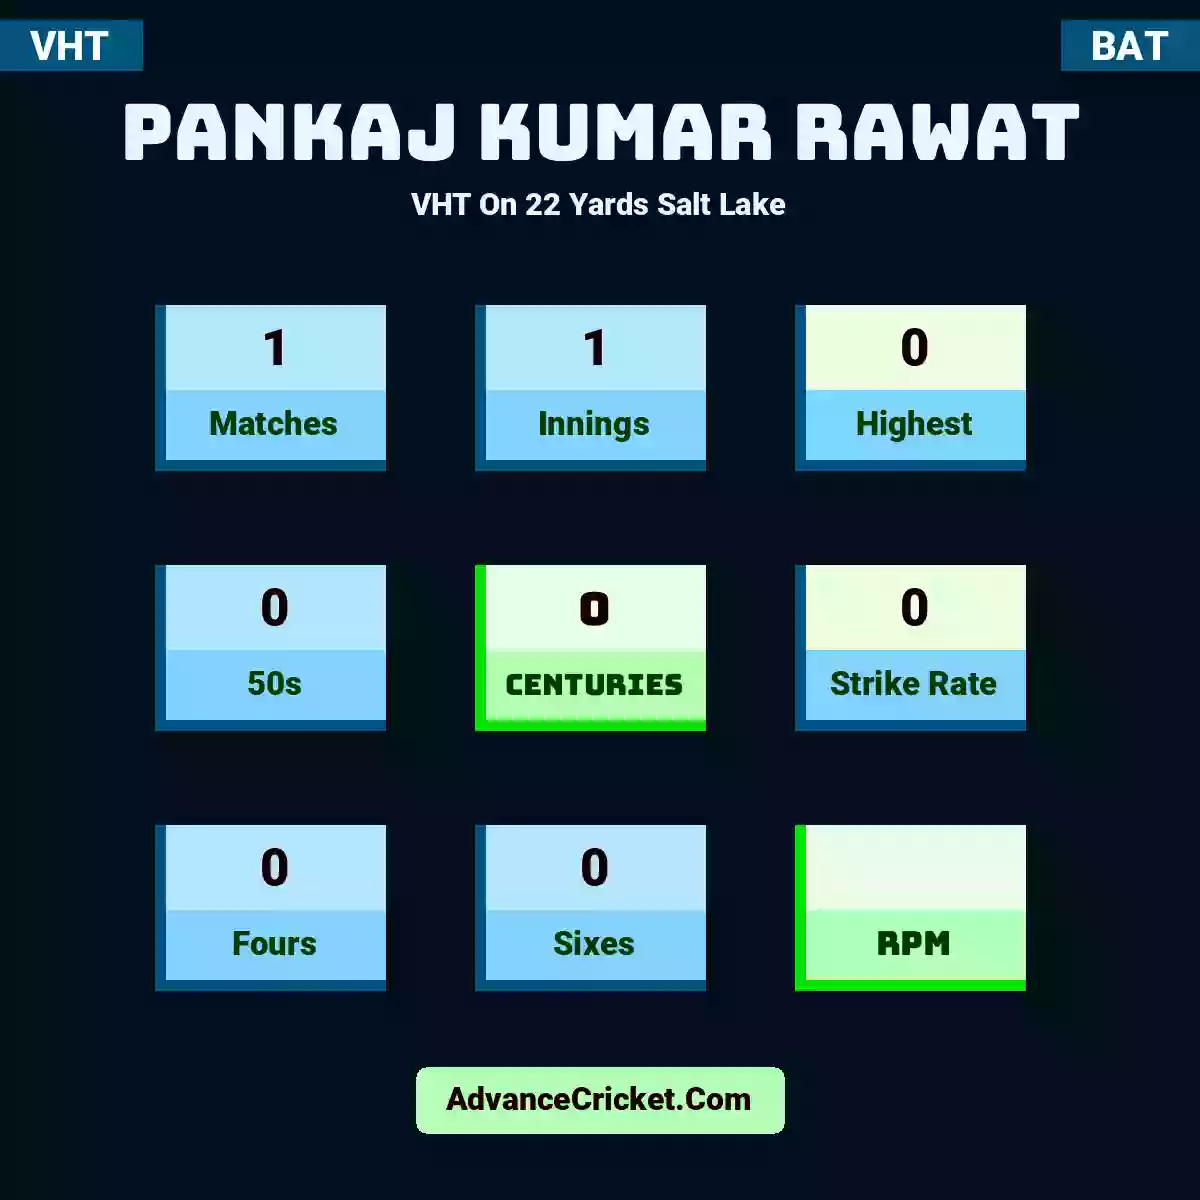 Pankaj Kumar Rawat VHT  On 22 Yards Salt Lake, Pankaj Kumar Rawat played 1 matches, scored 0 runs as highest, 0 half-centuries, and 0 centuries, with a strike rate of 0. P.Rawat hit 0 fours and 0 sixes.